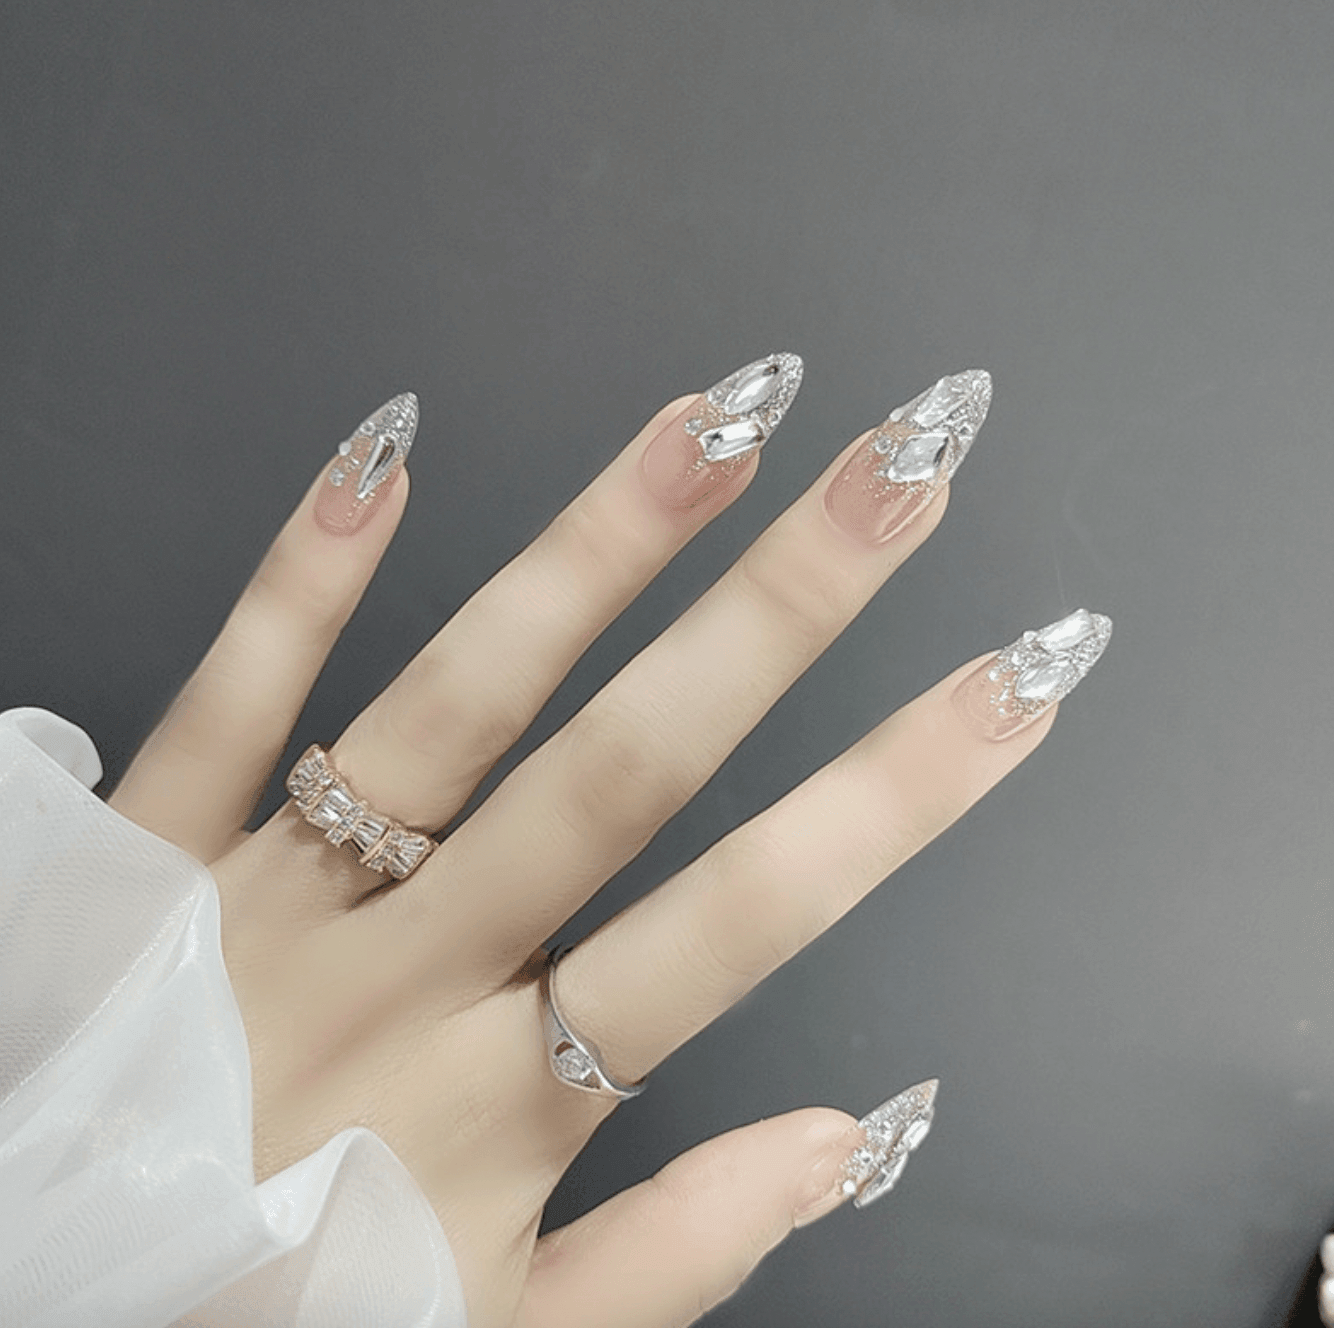 almond shaped nails short designs｜TikTok Search